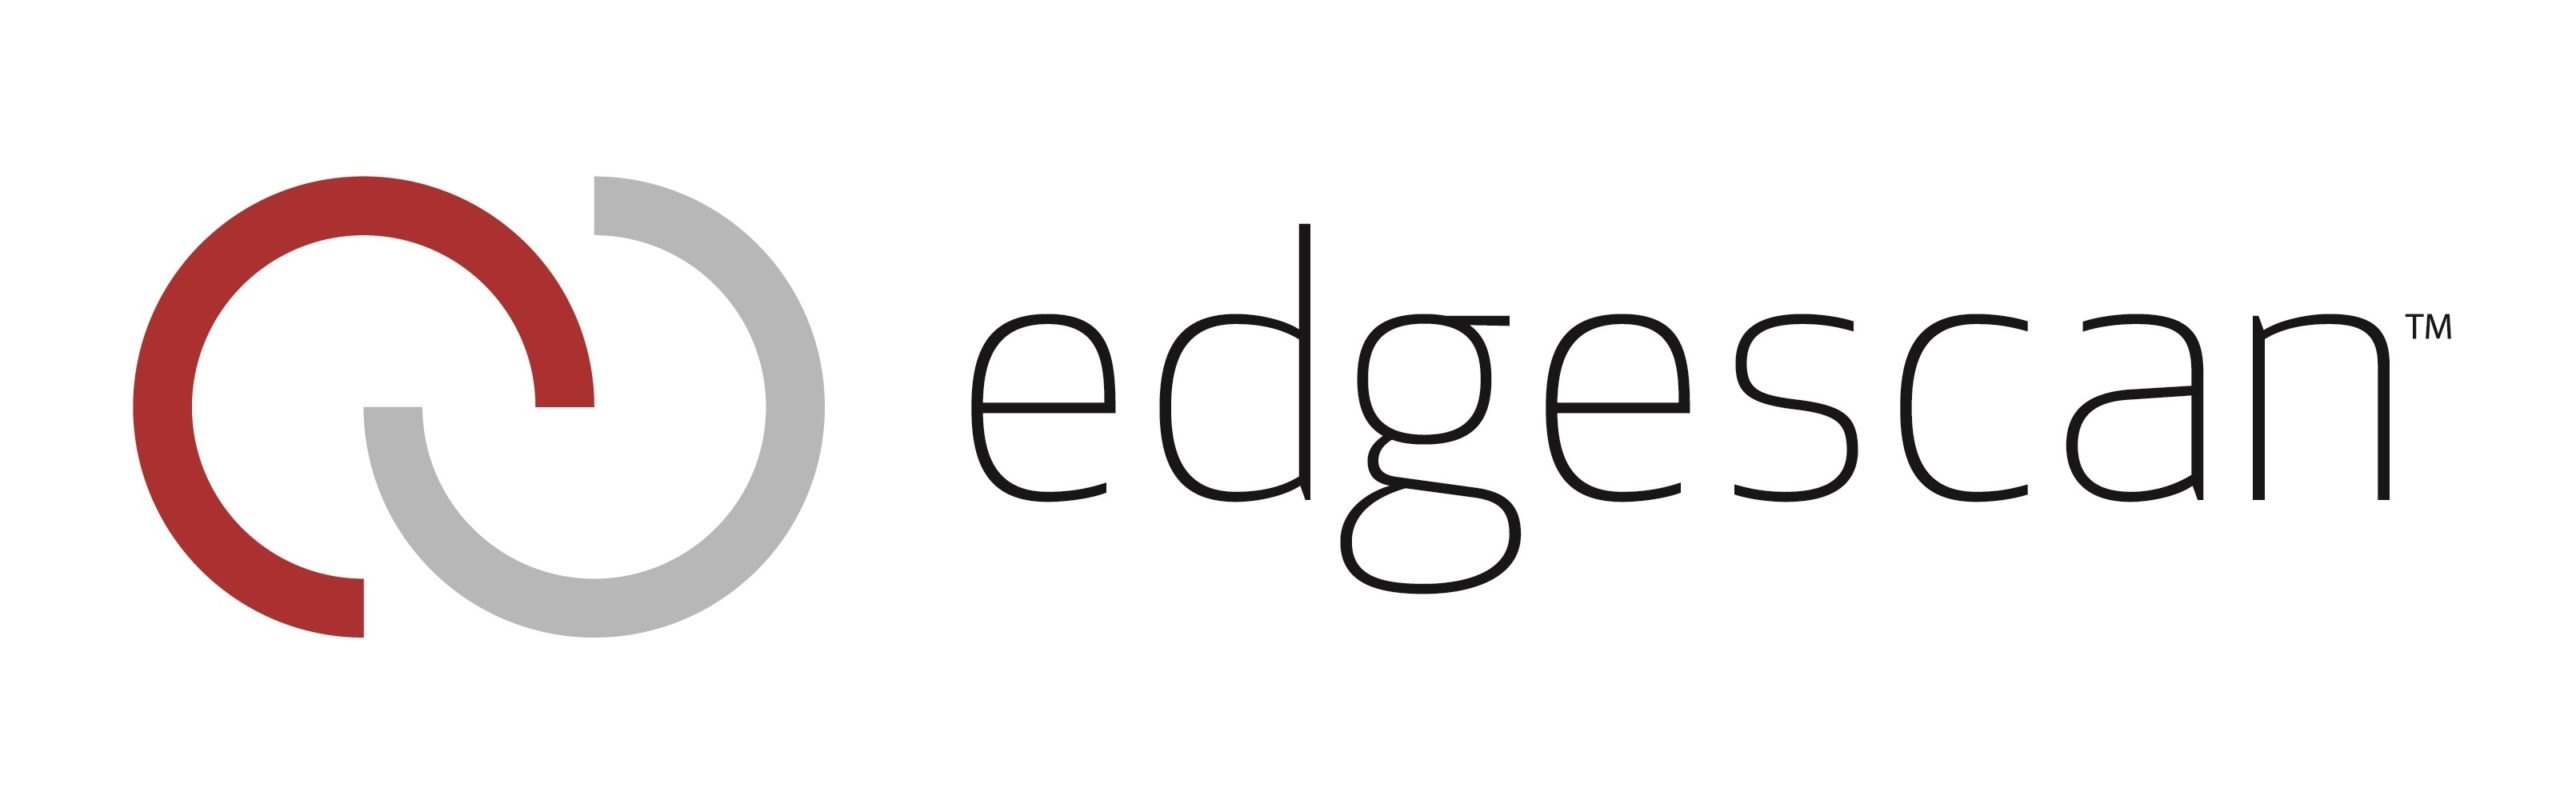 edgescan logo_left_used for labels